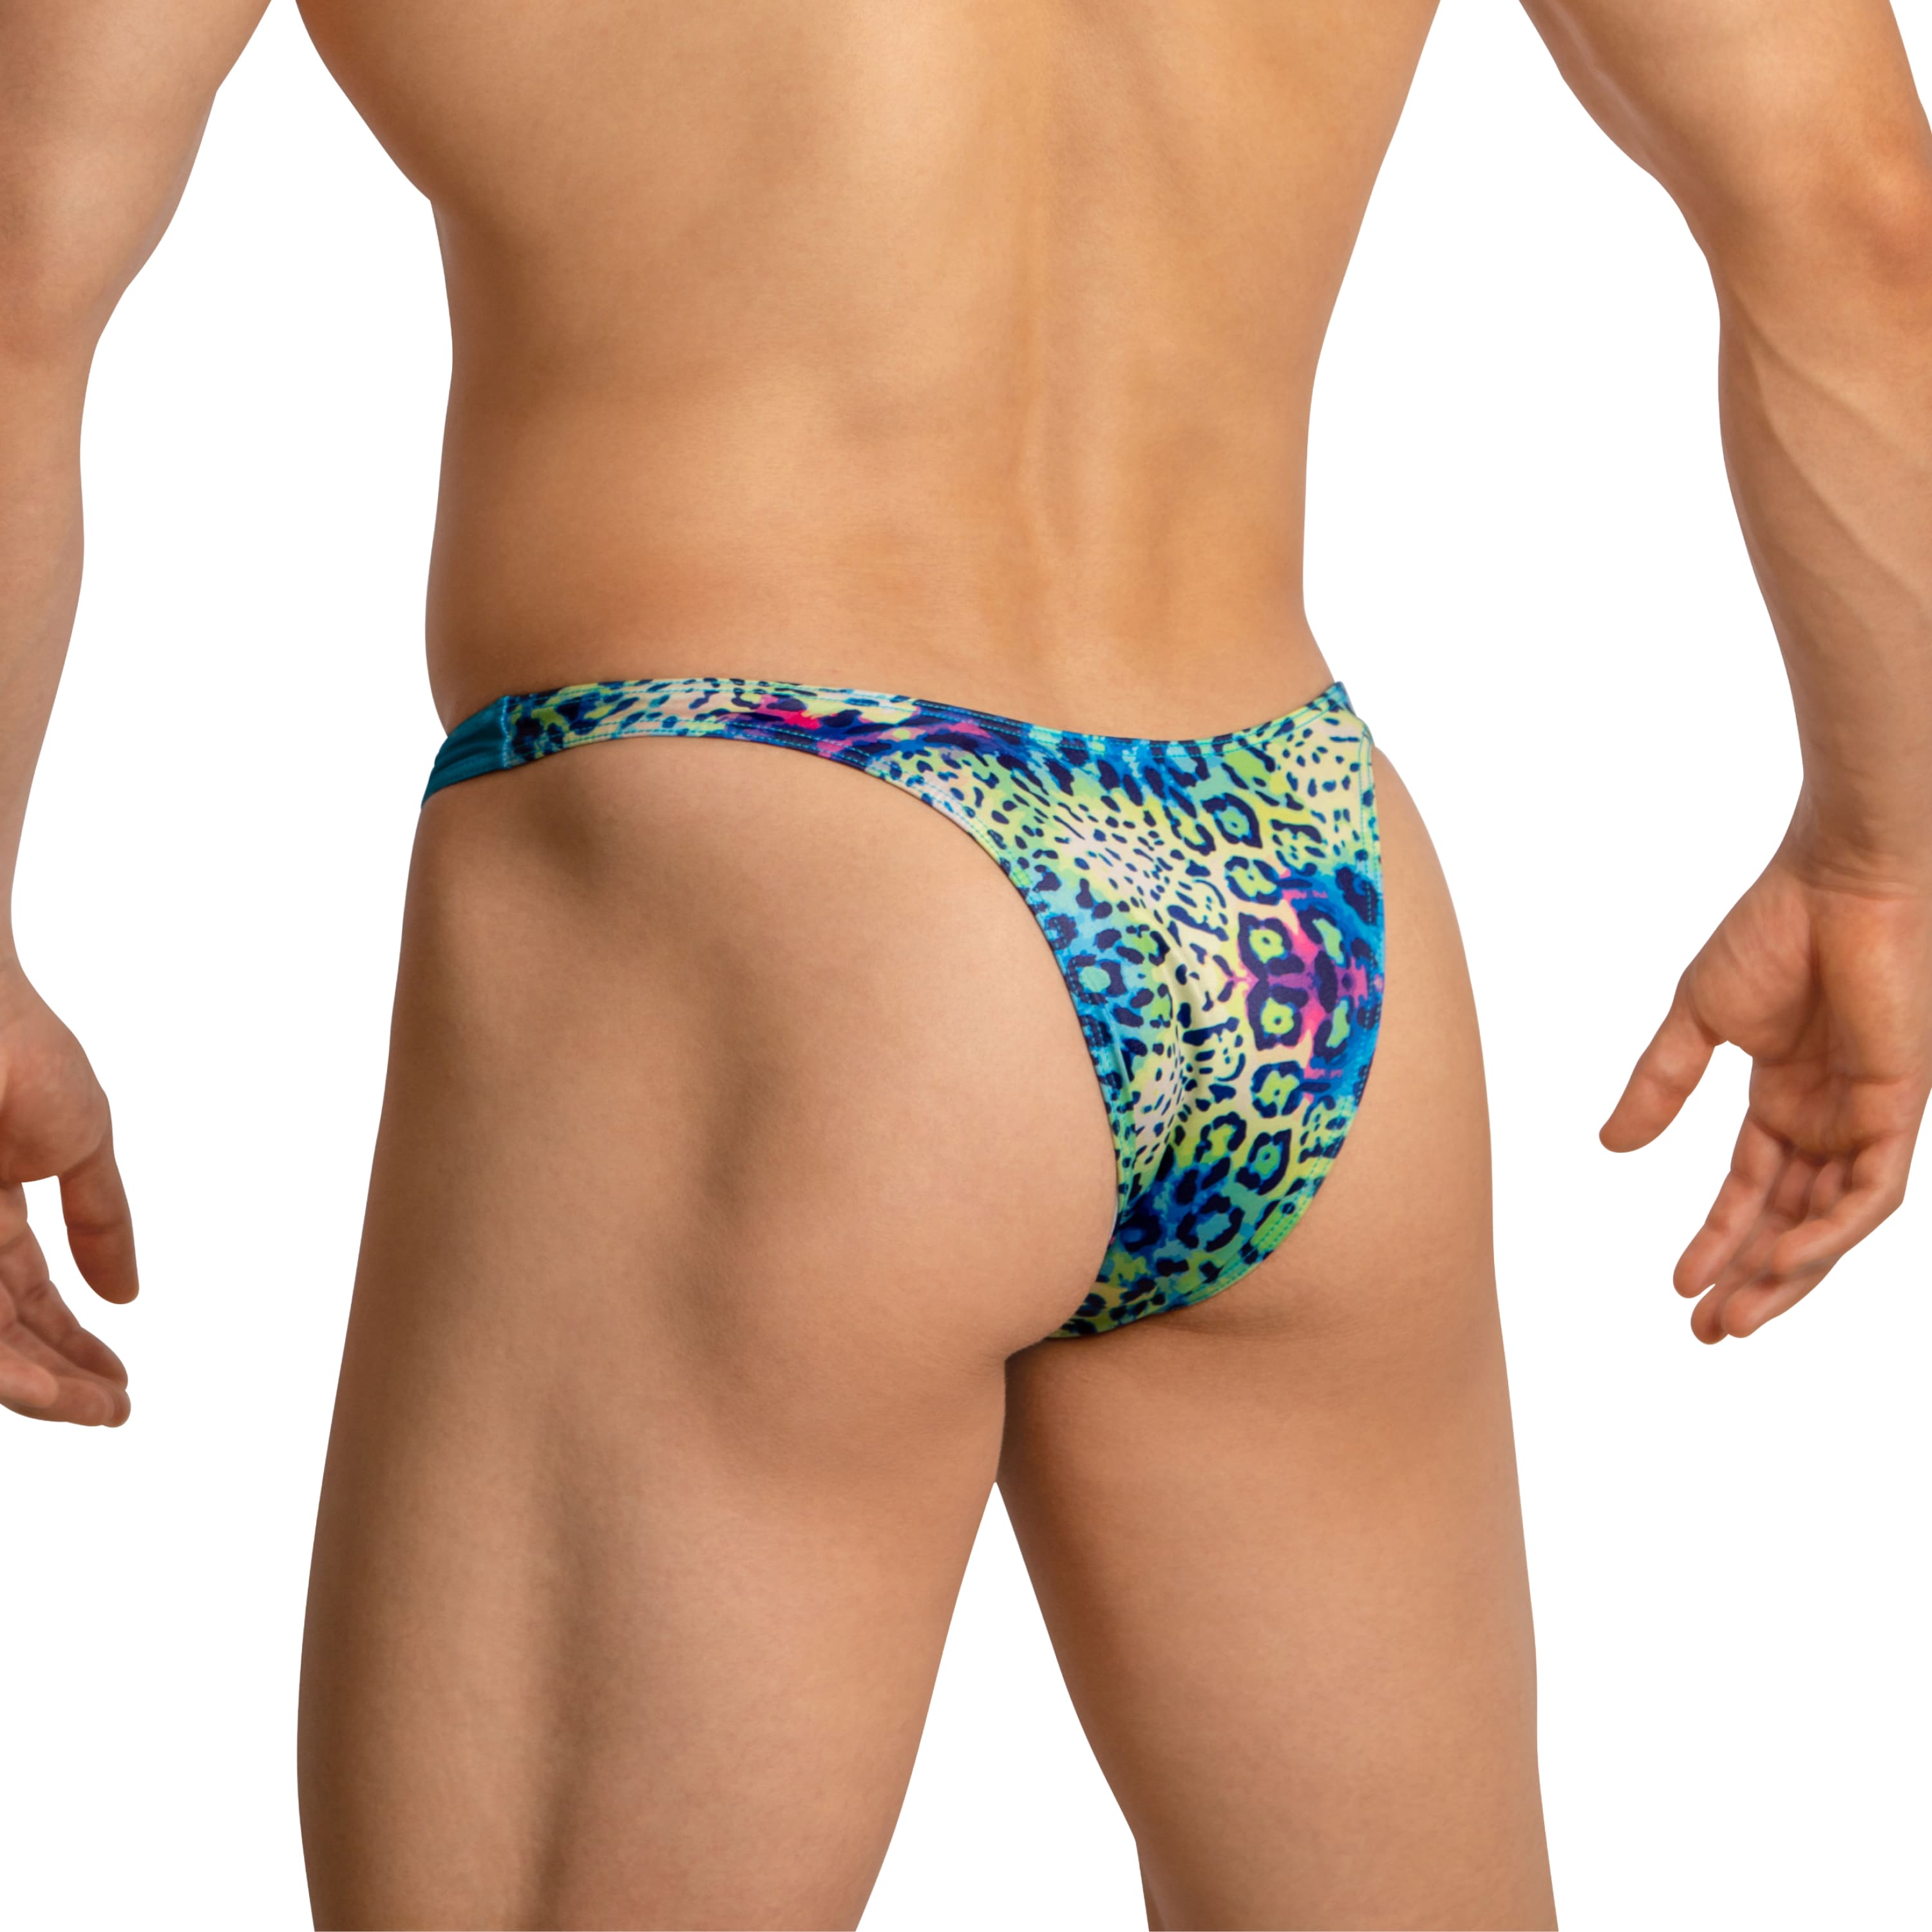 Daniel Alexander DAI100 Seductive Bikini with animal print and transparency Provocative Men's Underclothing